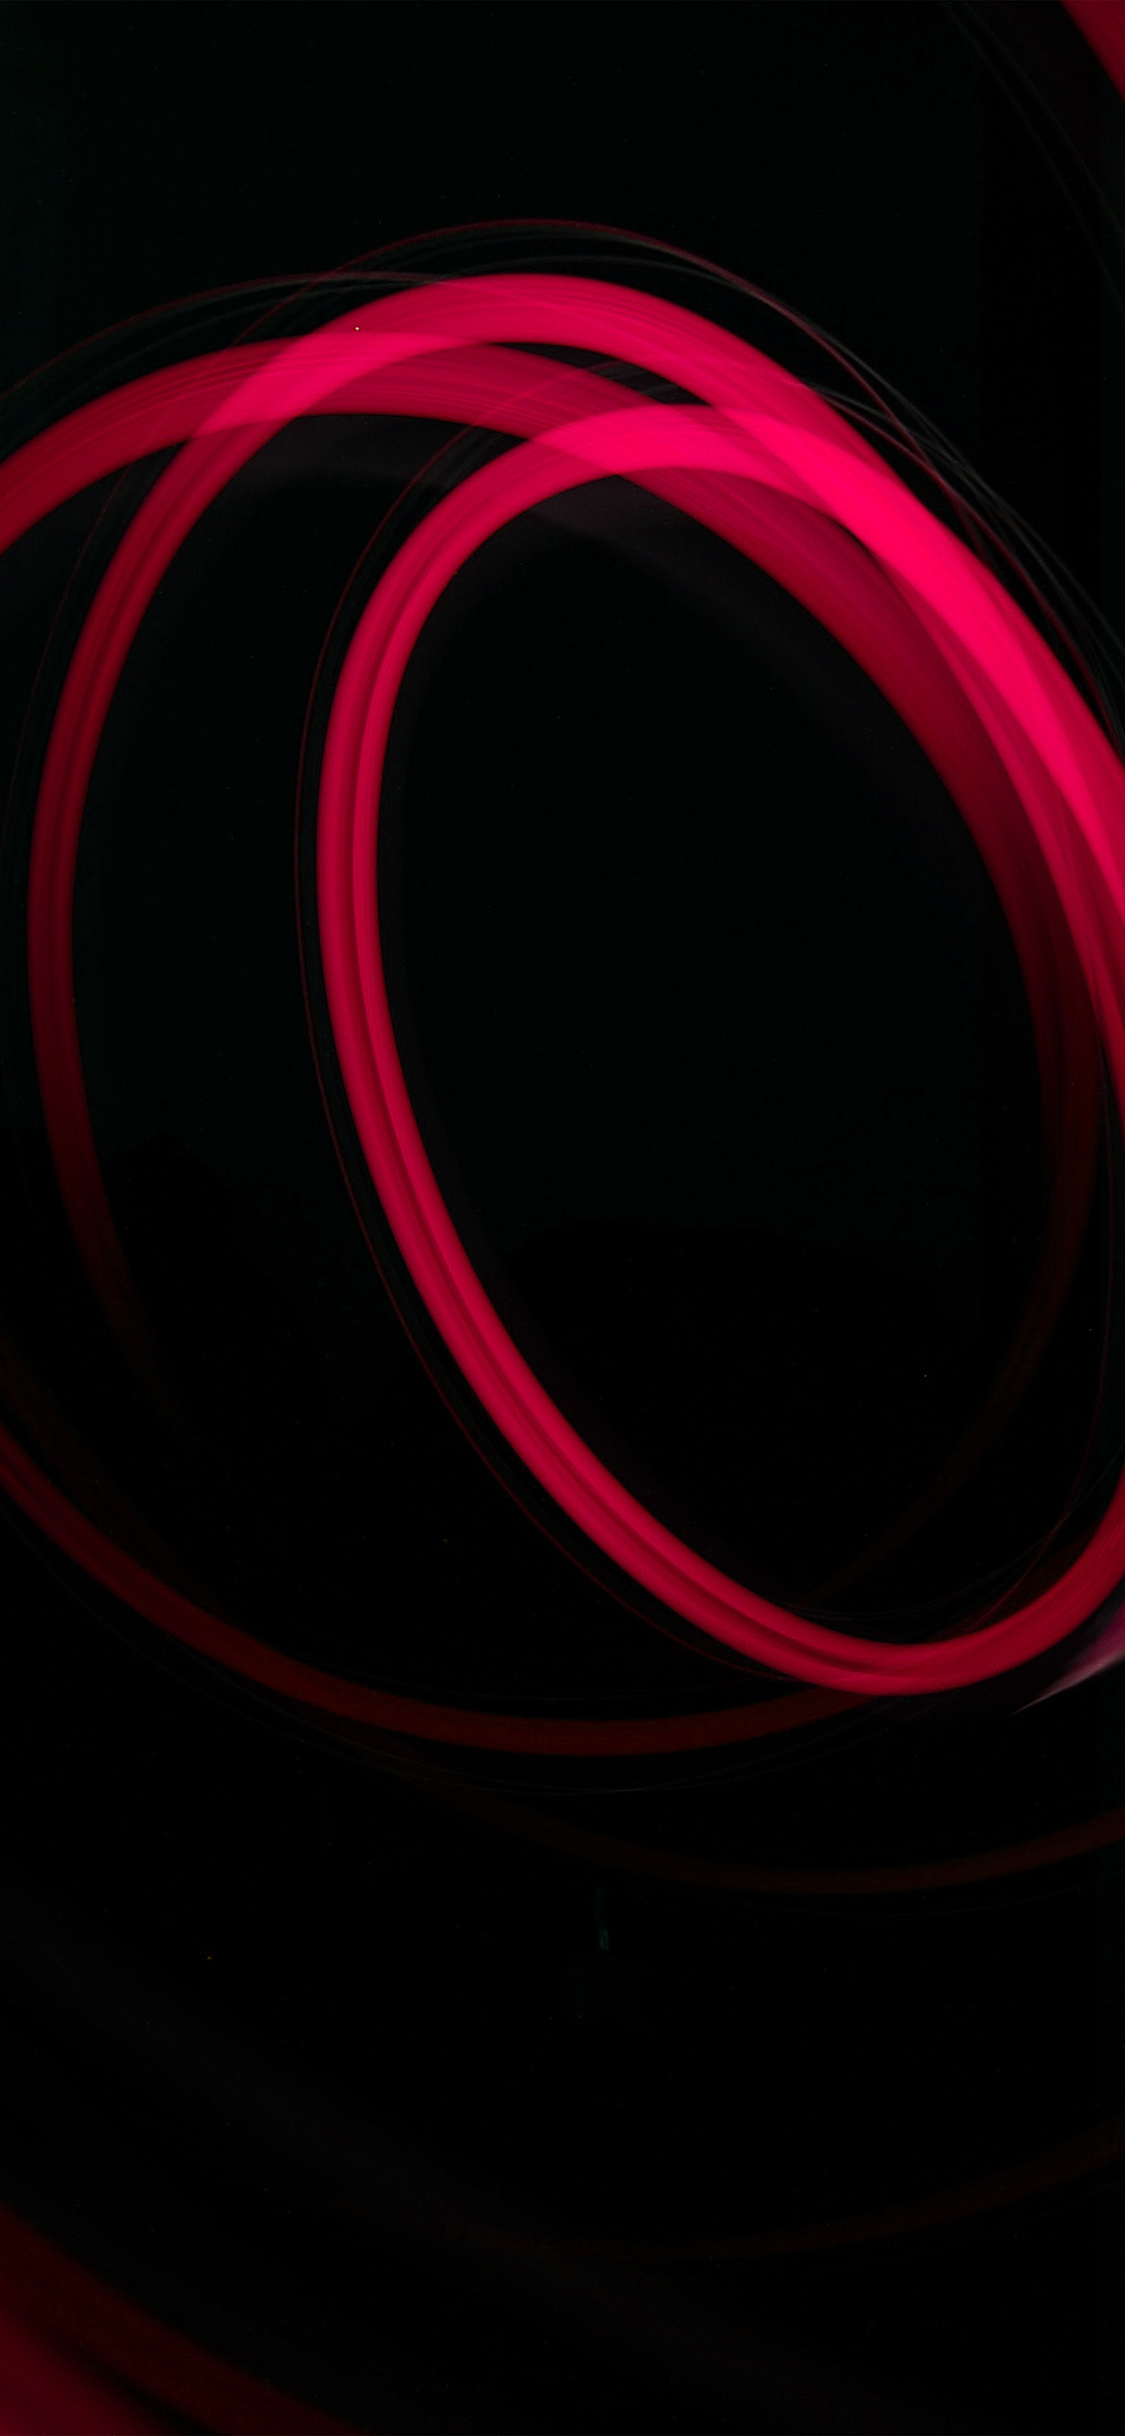 iPhone X wallpaper. circle light dark red pattern